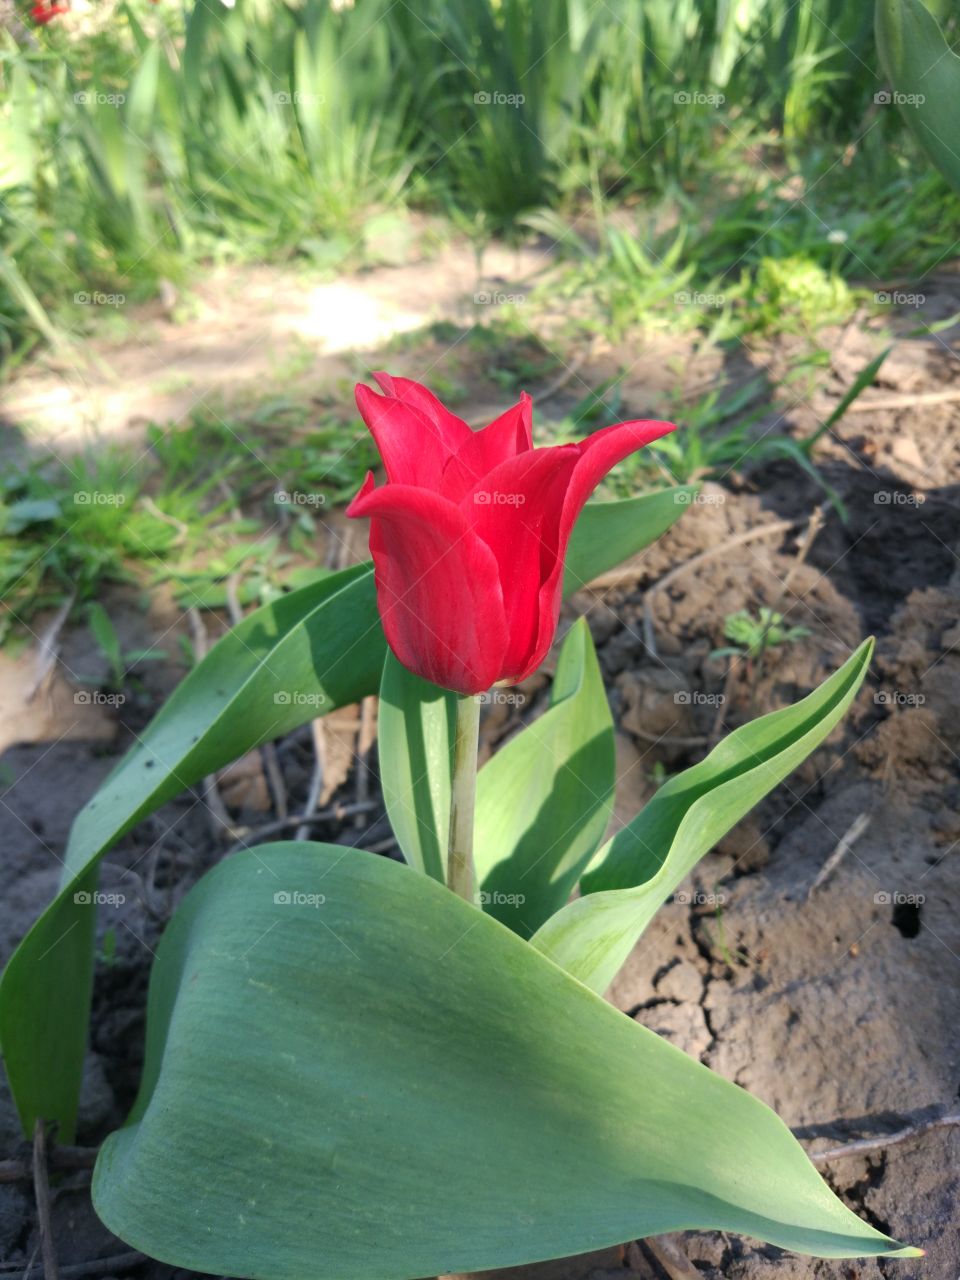 Incredible red tulip